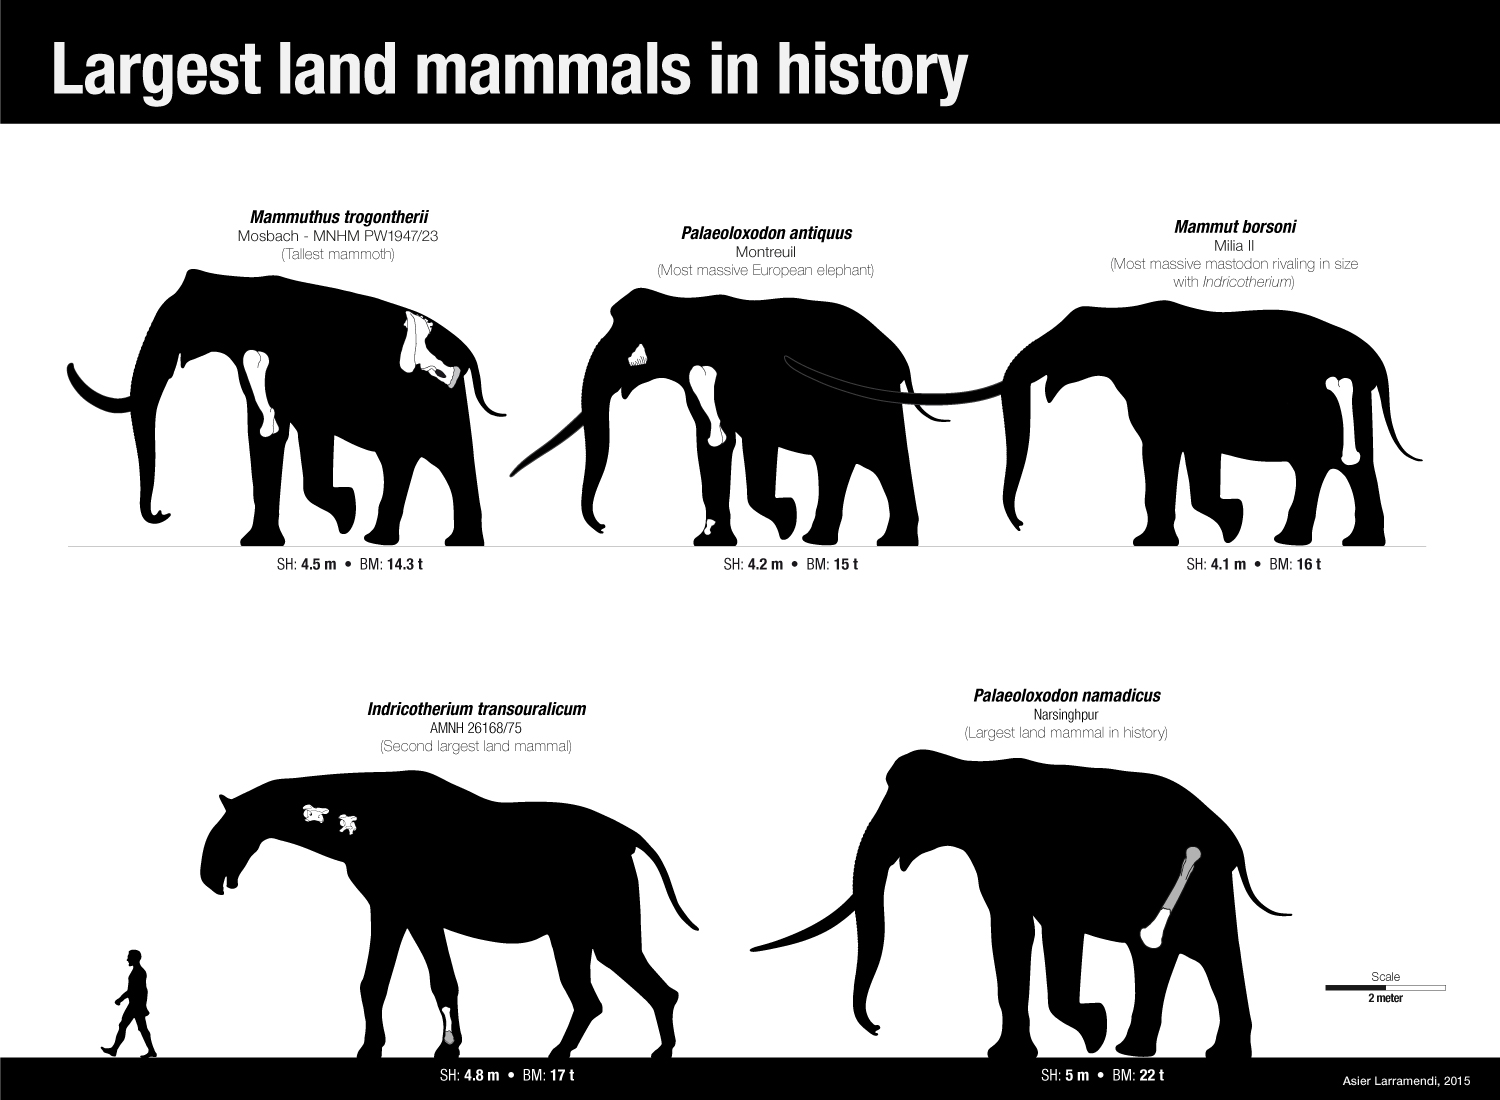 The largest land mammals in history by Asier-Larramendi on DeviantArt